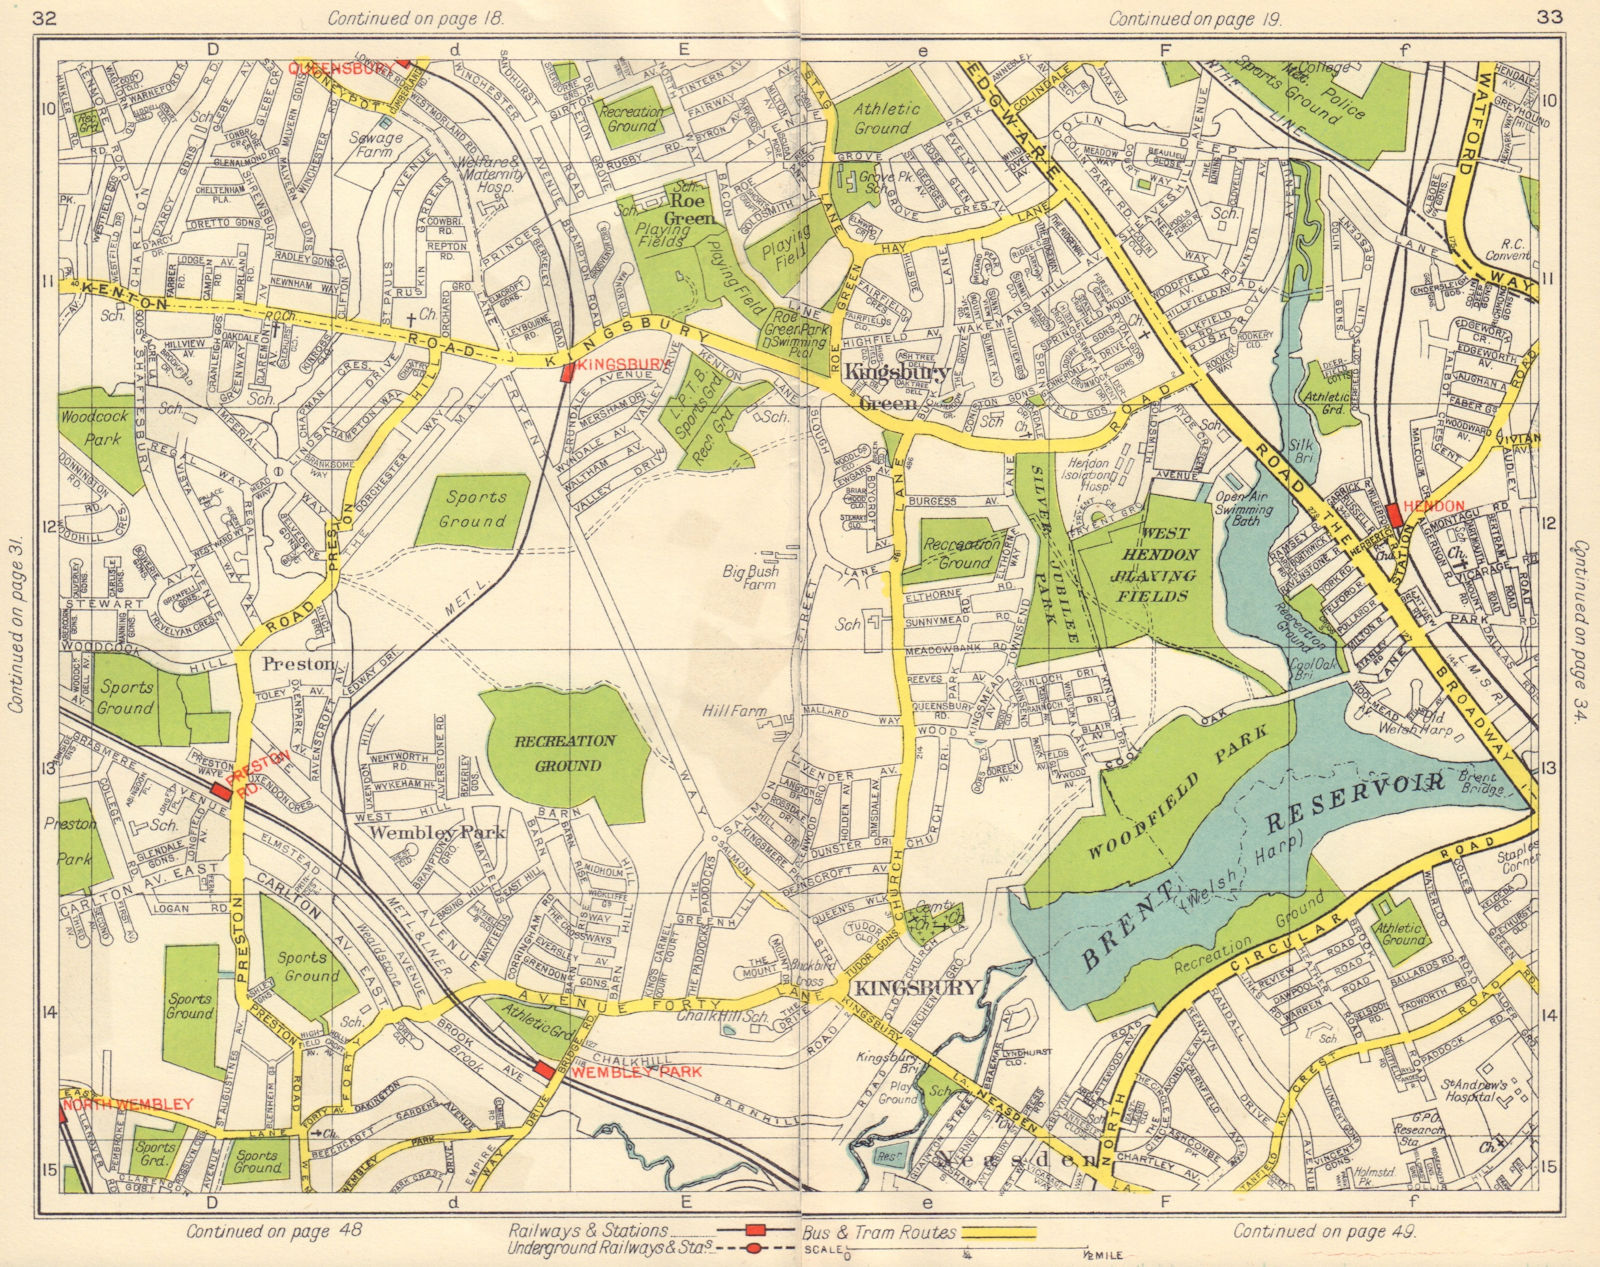 NW LONDON. Kingsbury Green Wembey Park The Hyde Hendon Preston Road 1948 map